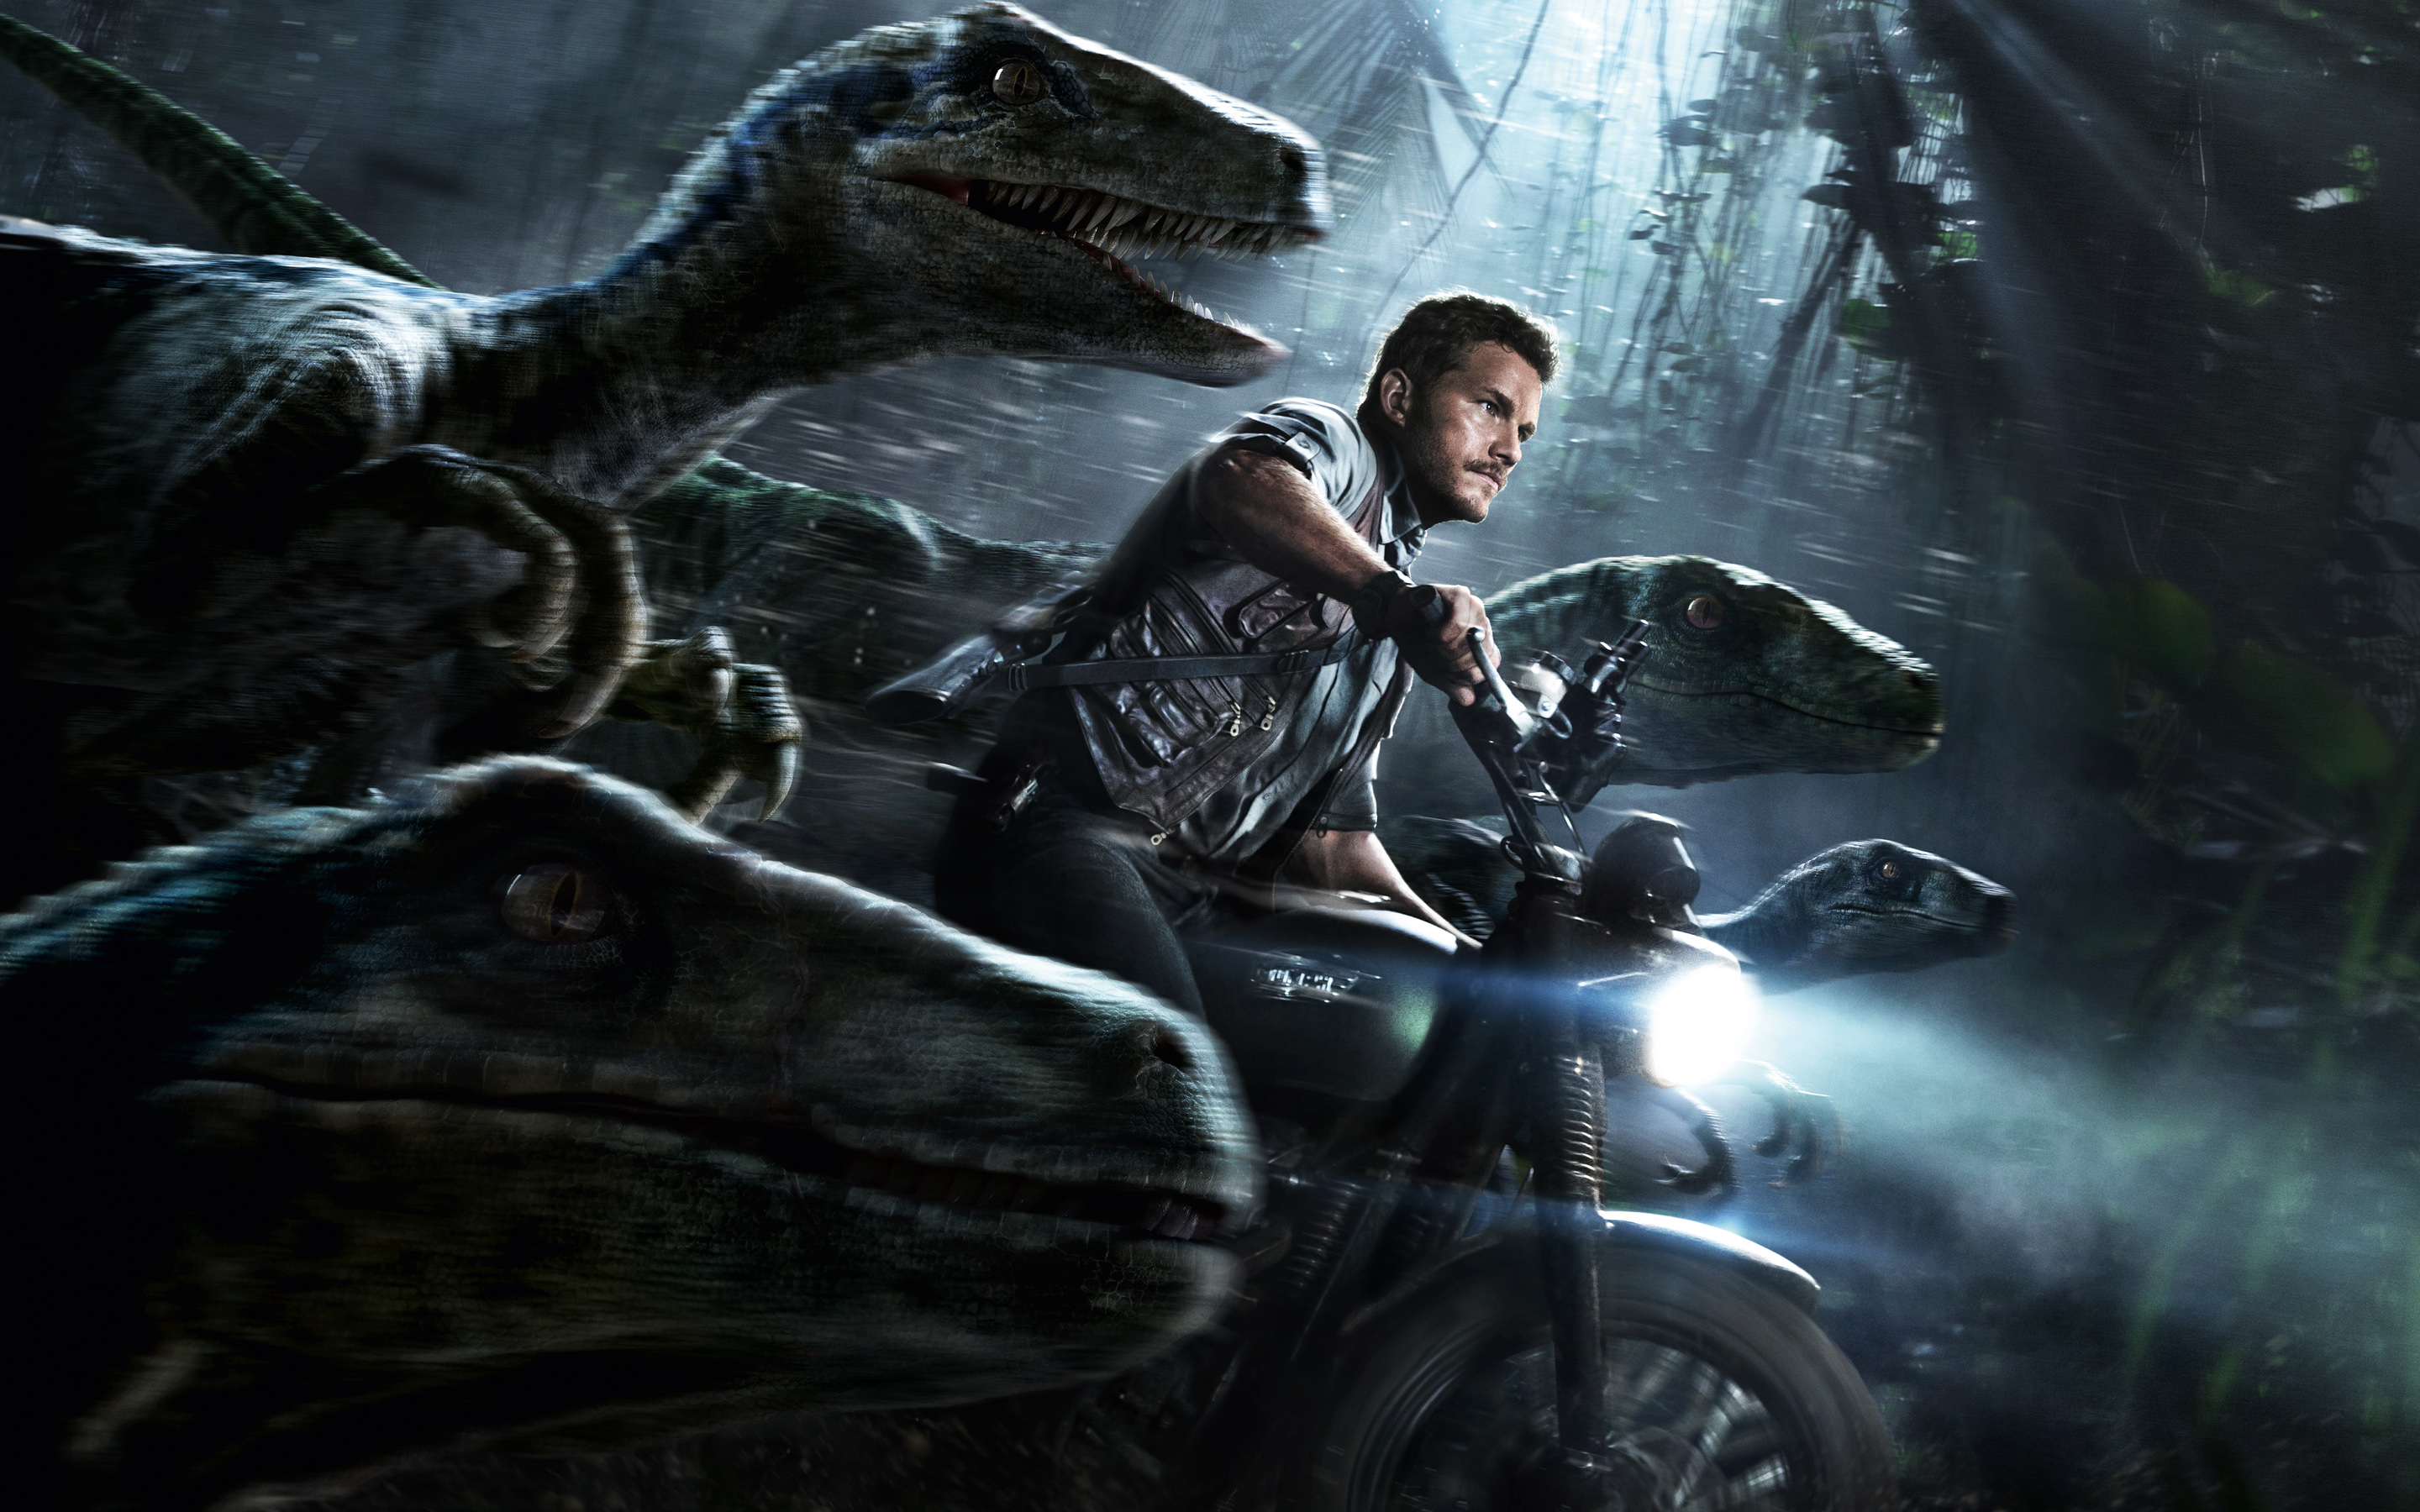 Chris Pratt Jurassic World